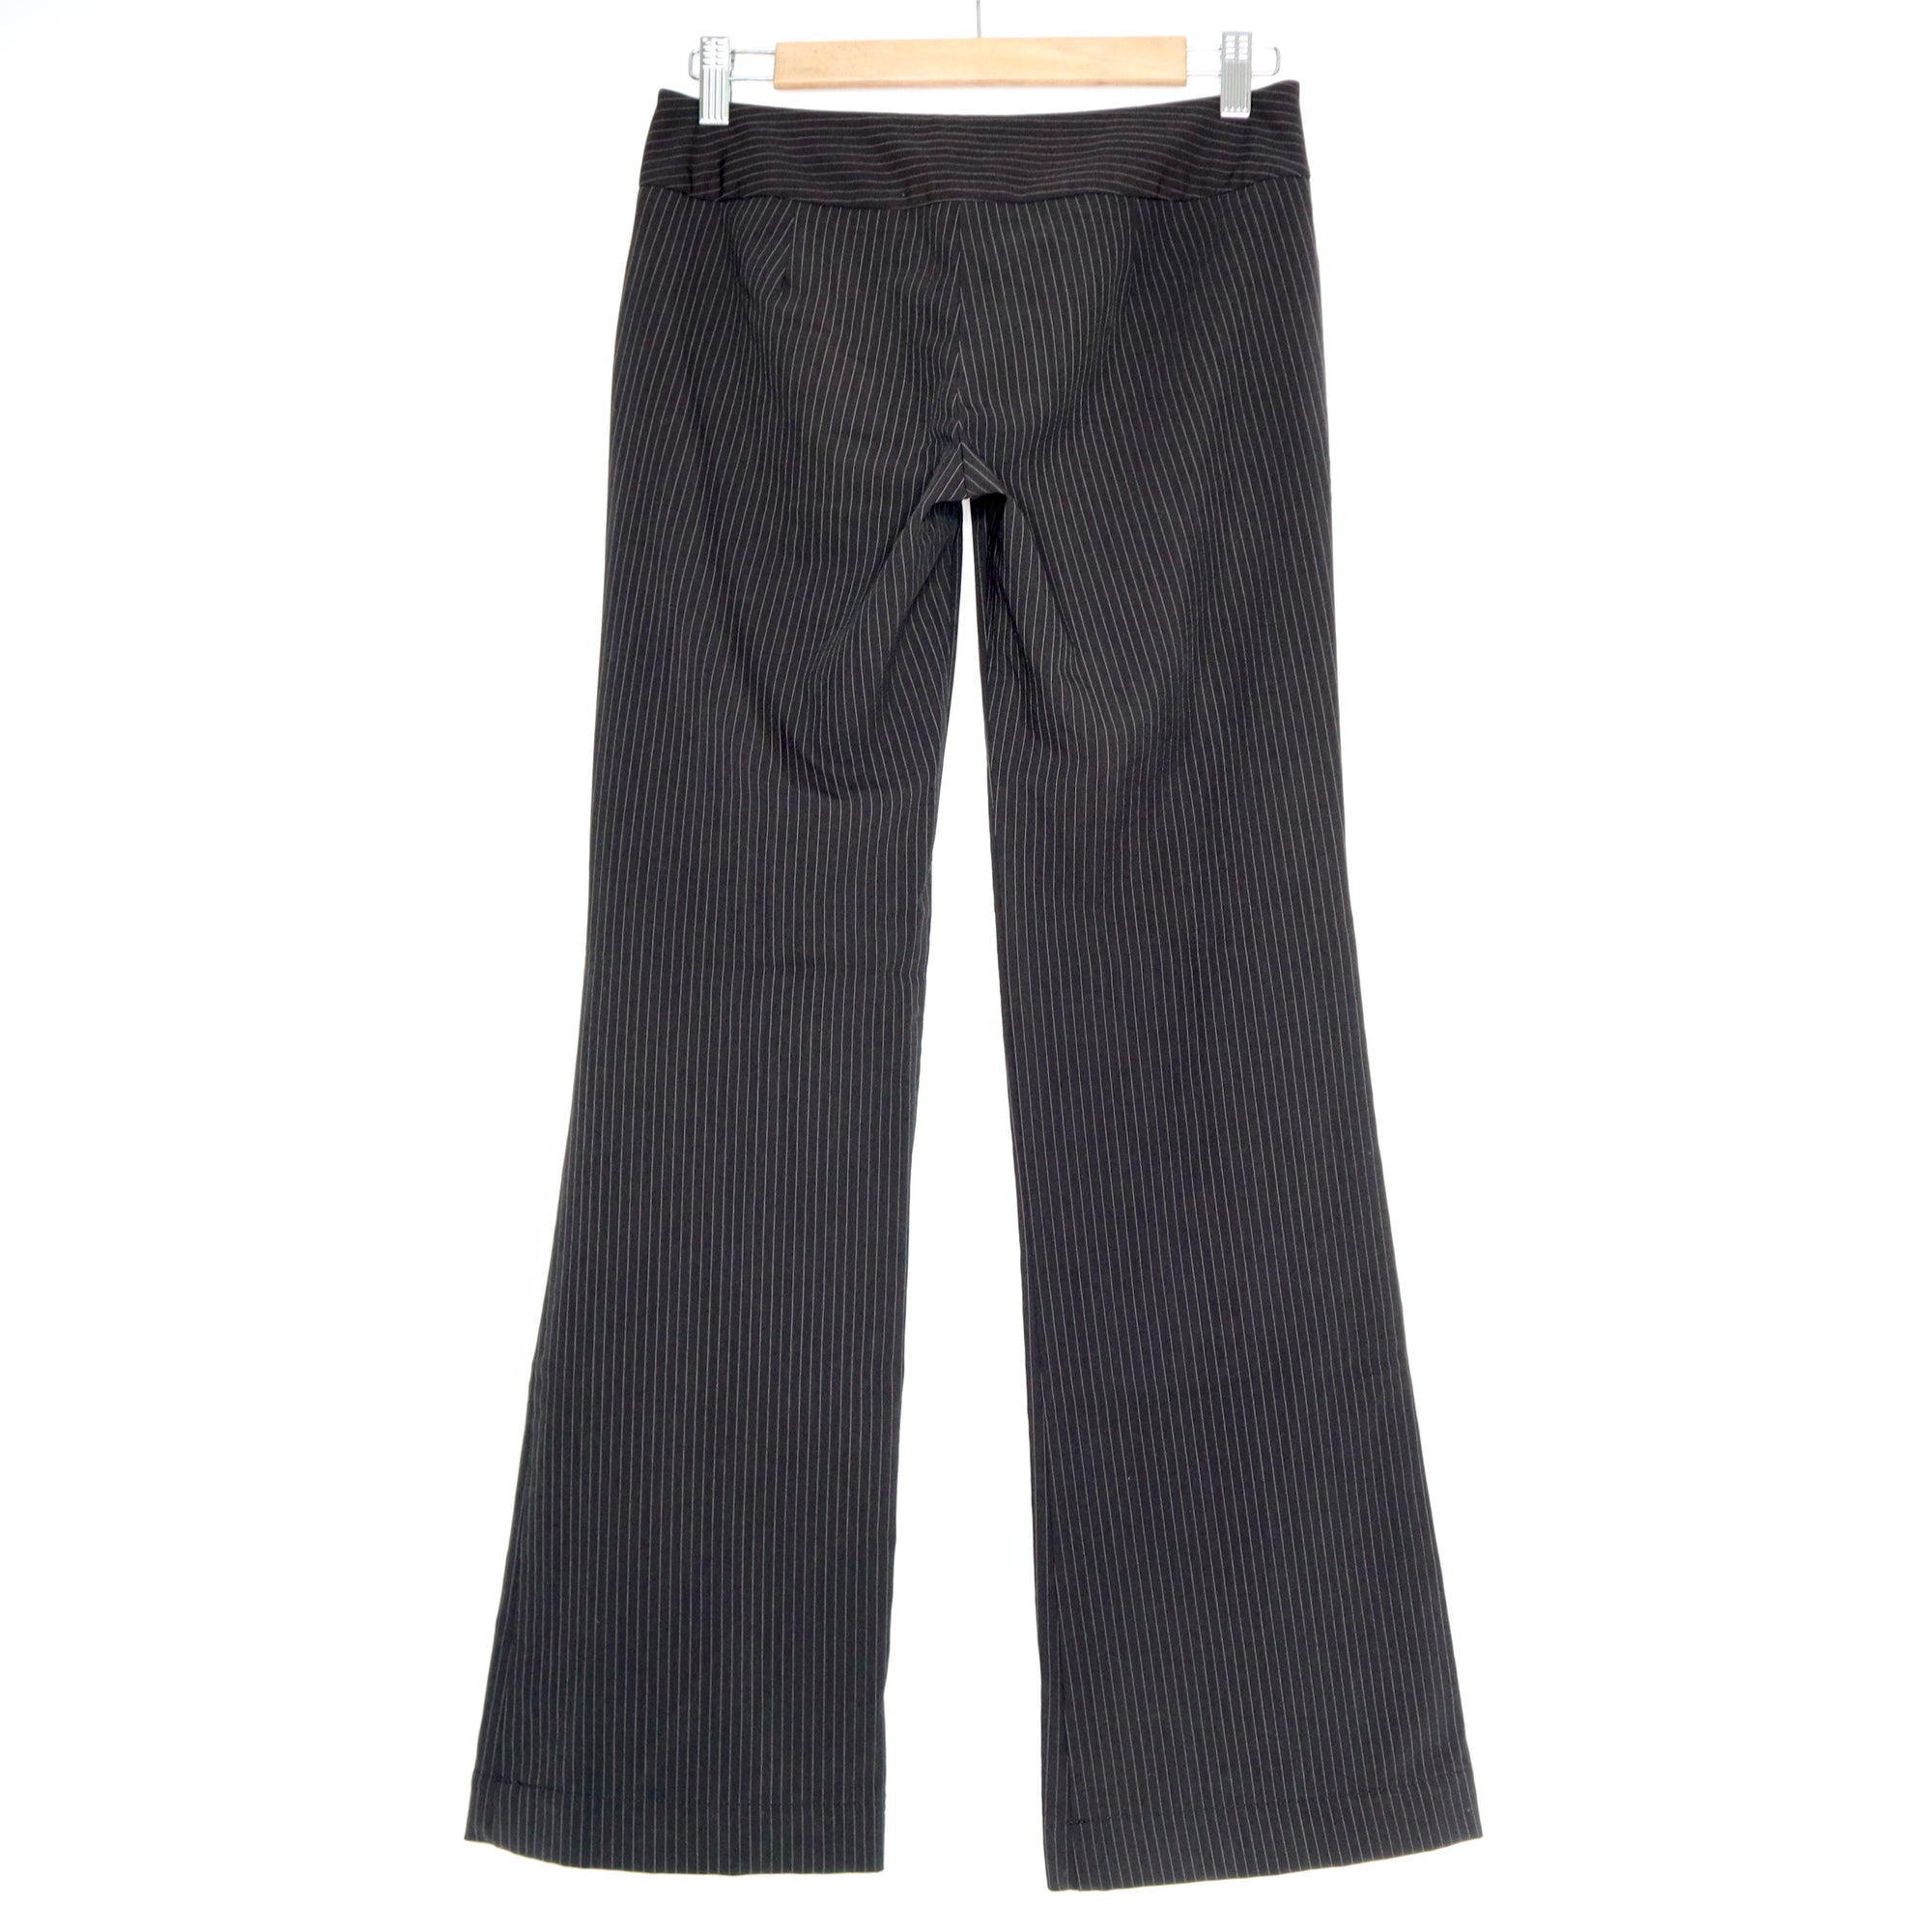 Vintage Early 2000s Low Rise Brown Pinstripe Pants